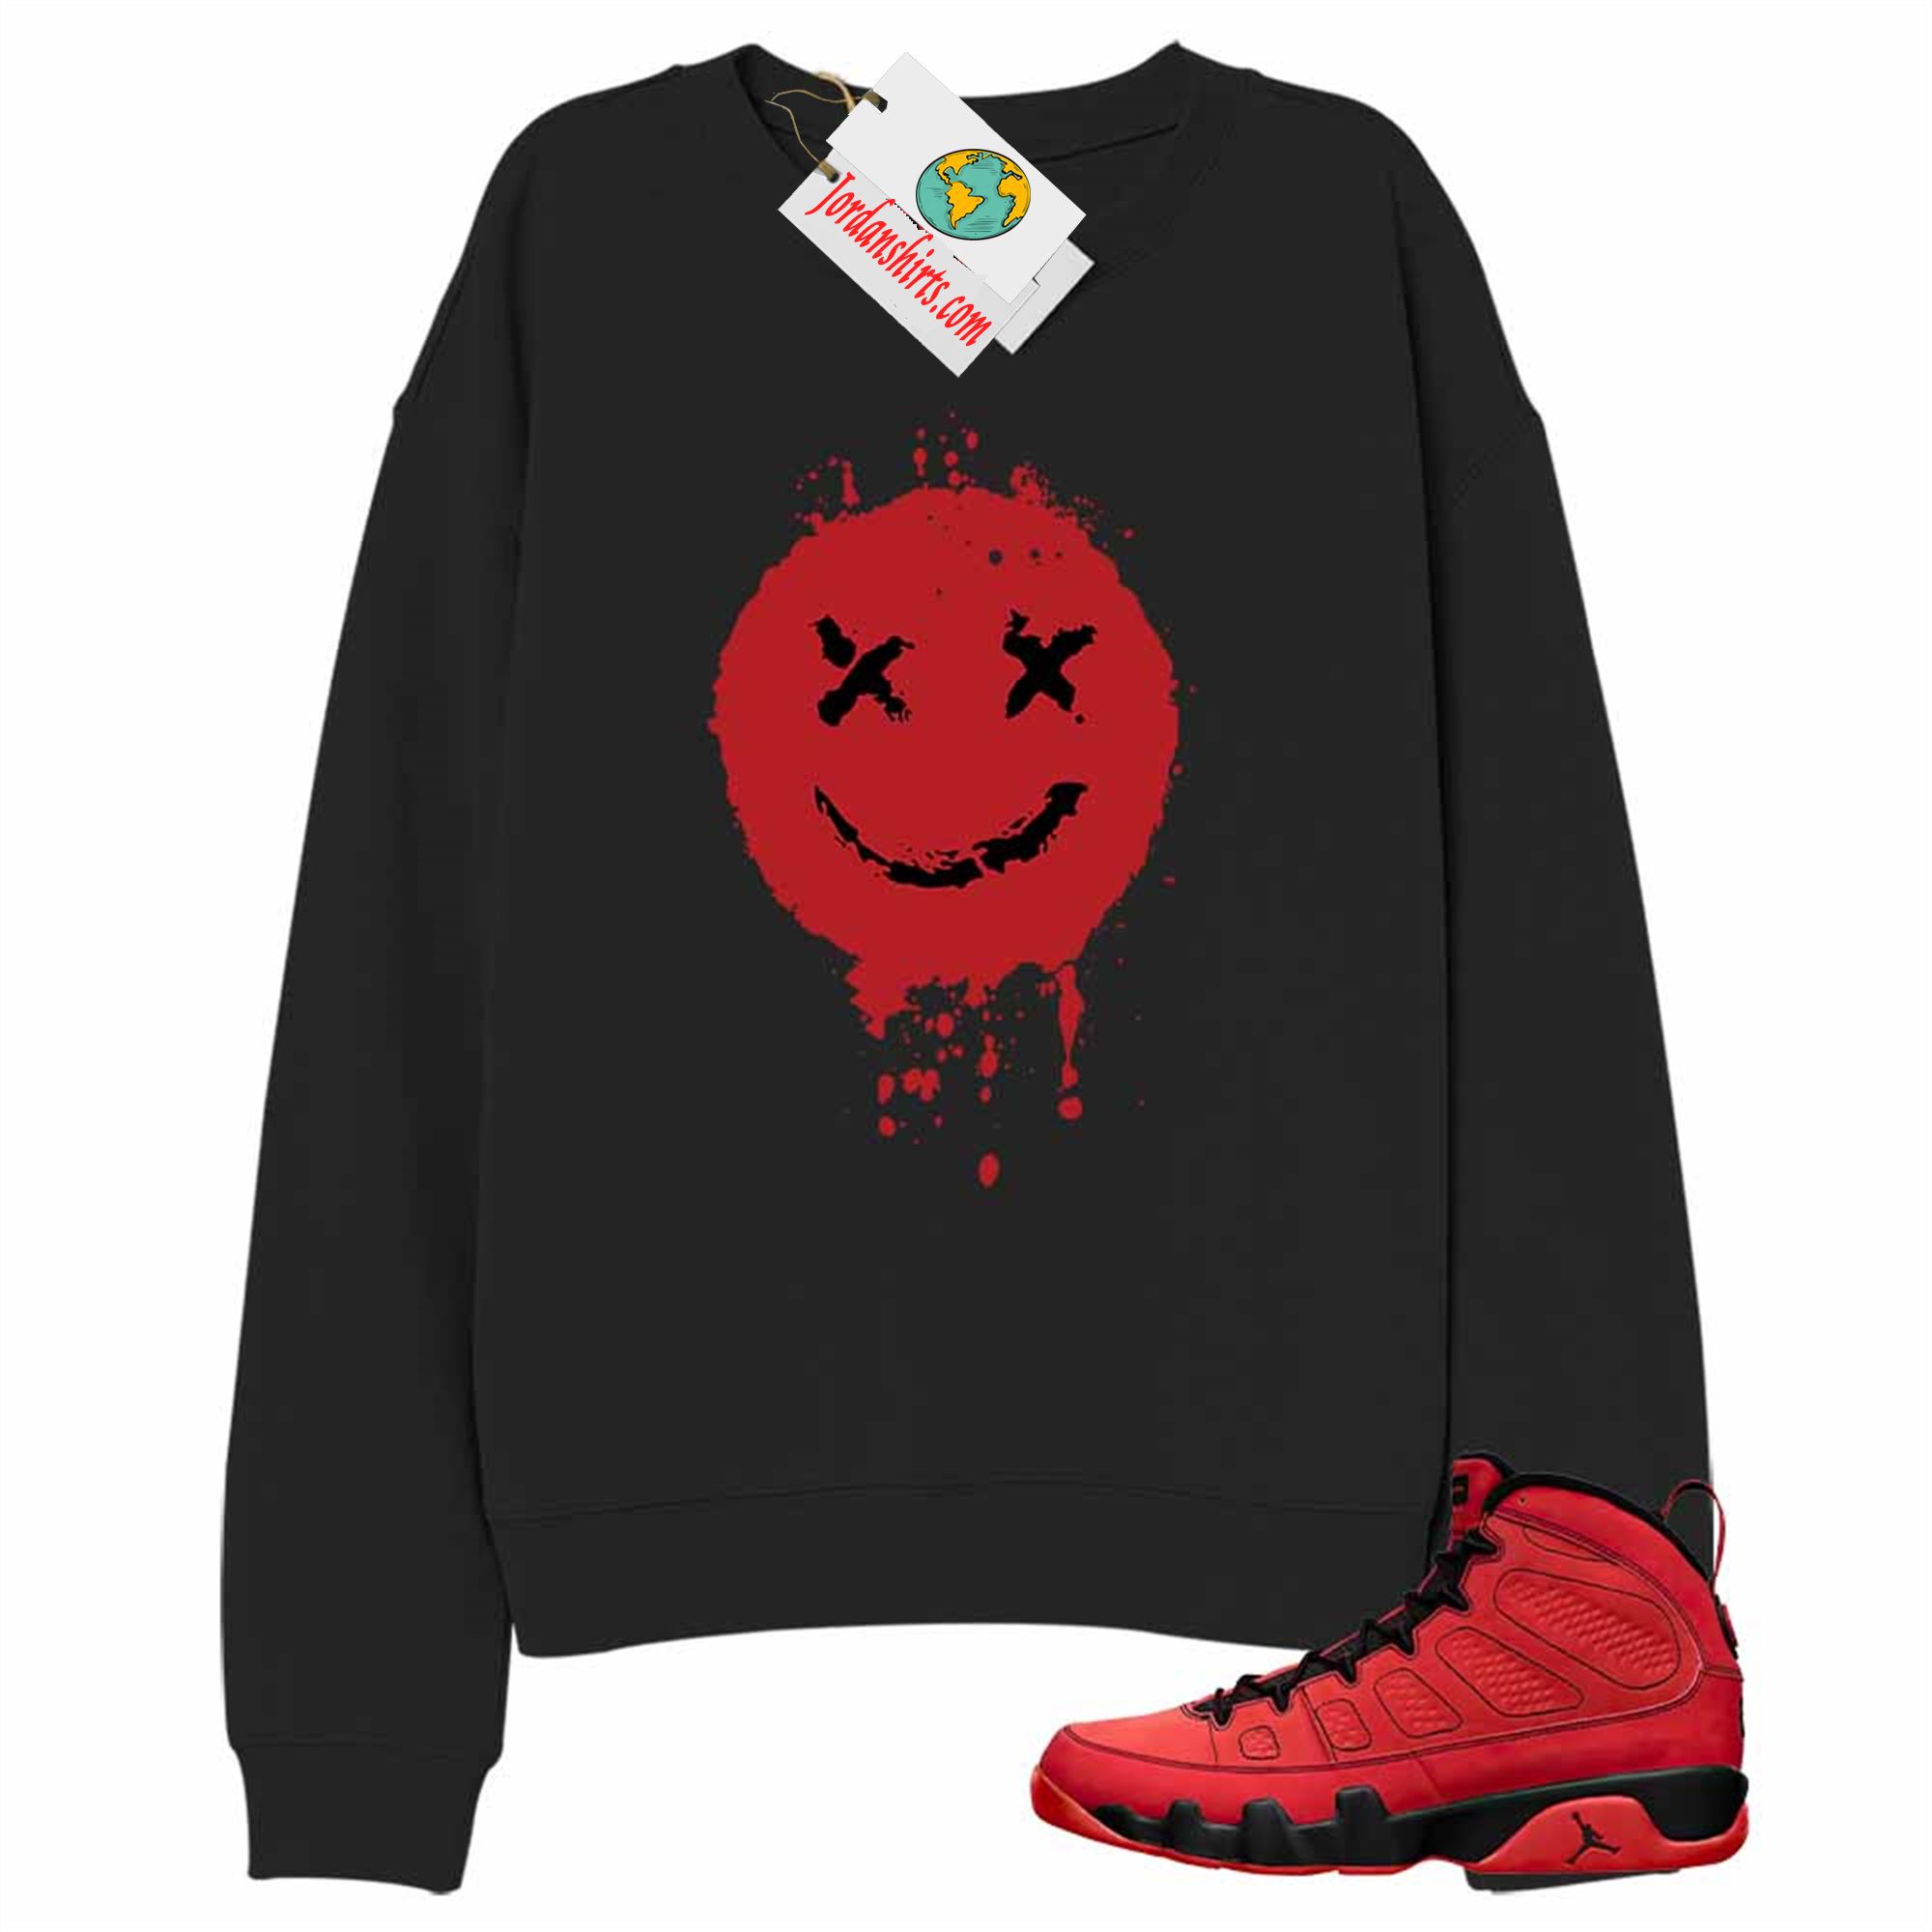 Jordan 9 Sweatshirt, Smile Happy Face Black Sweatshirt Air Jordan 9 Chile Red 9s Size Up To 5xl